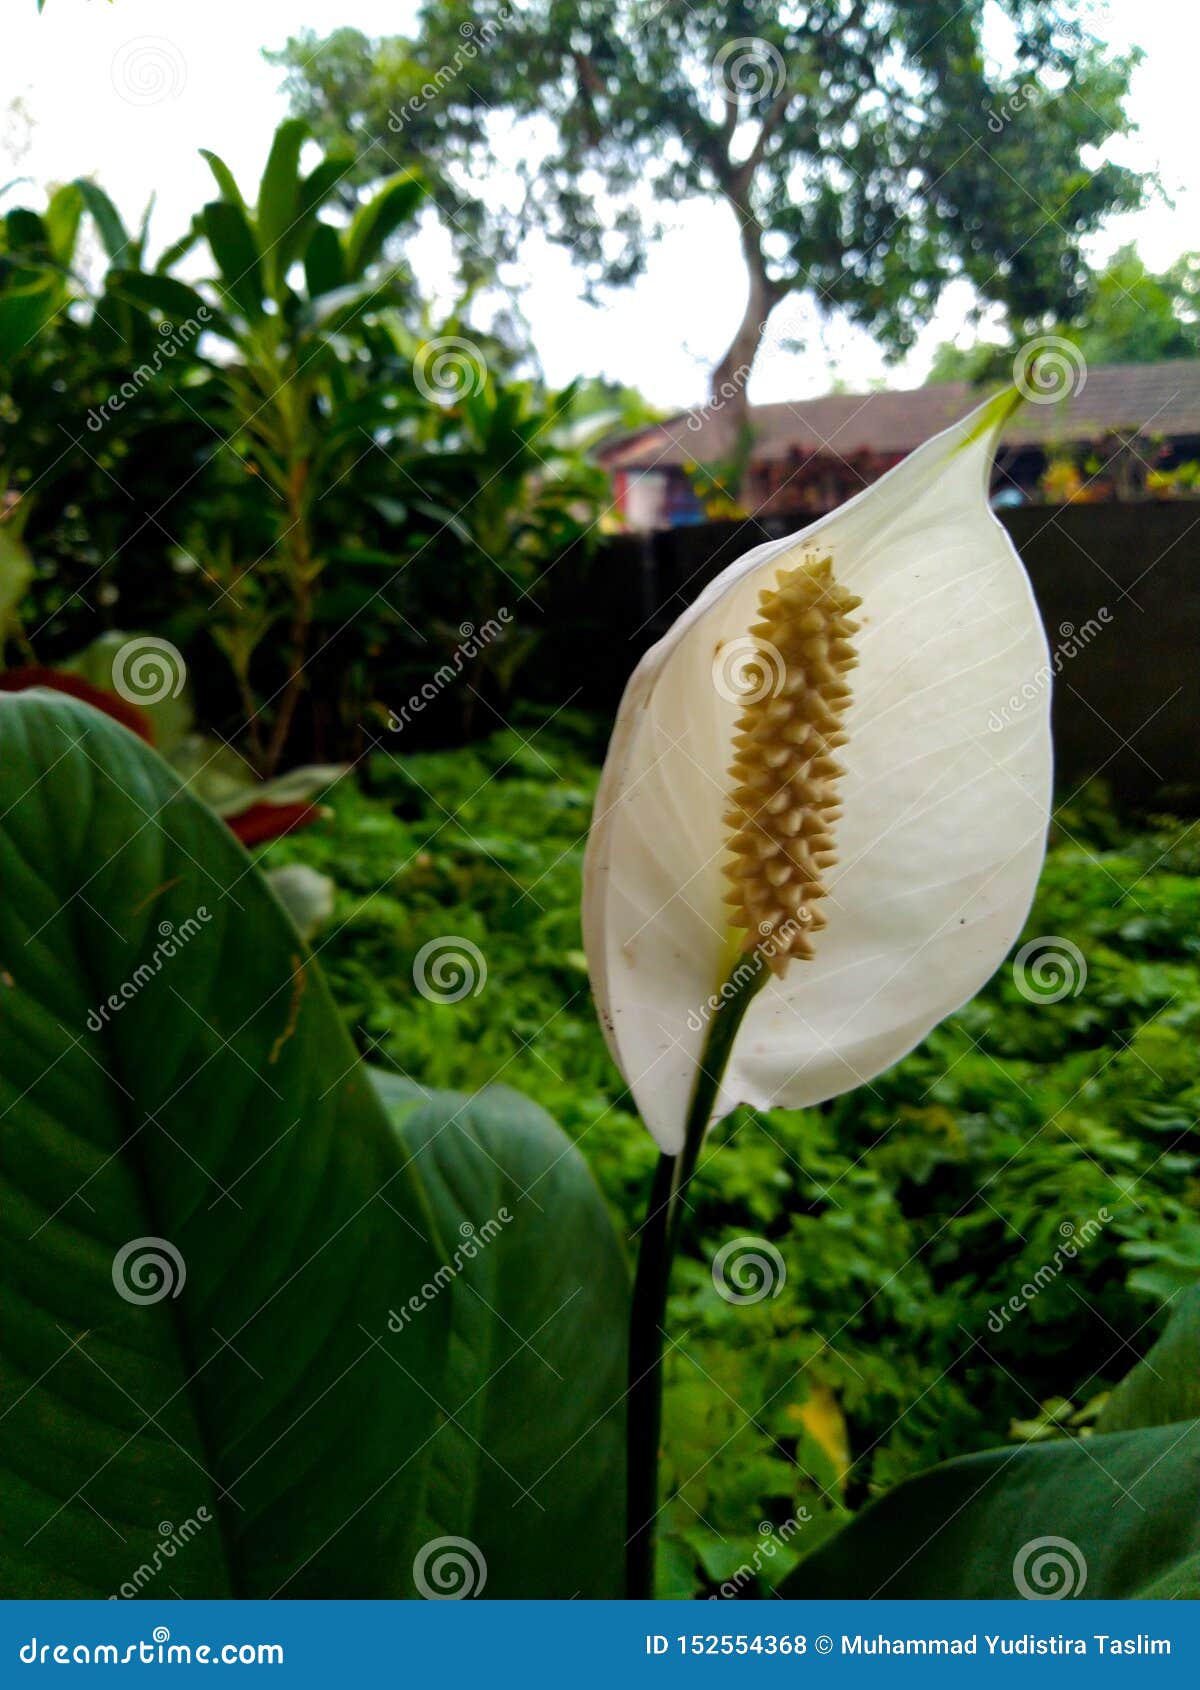  Bunga  Sepatu  Filum  Or Peace Lily Plant With White Petal 